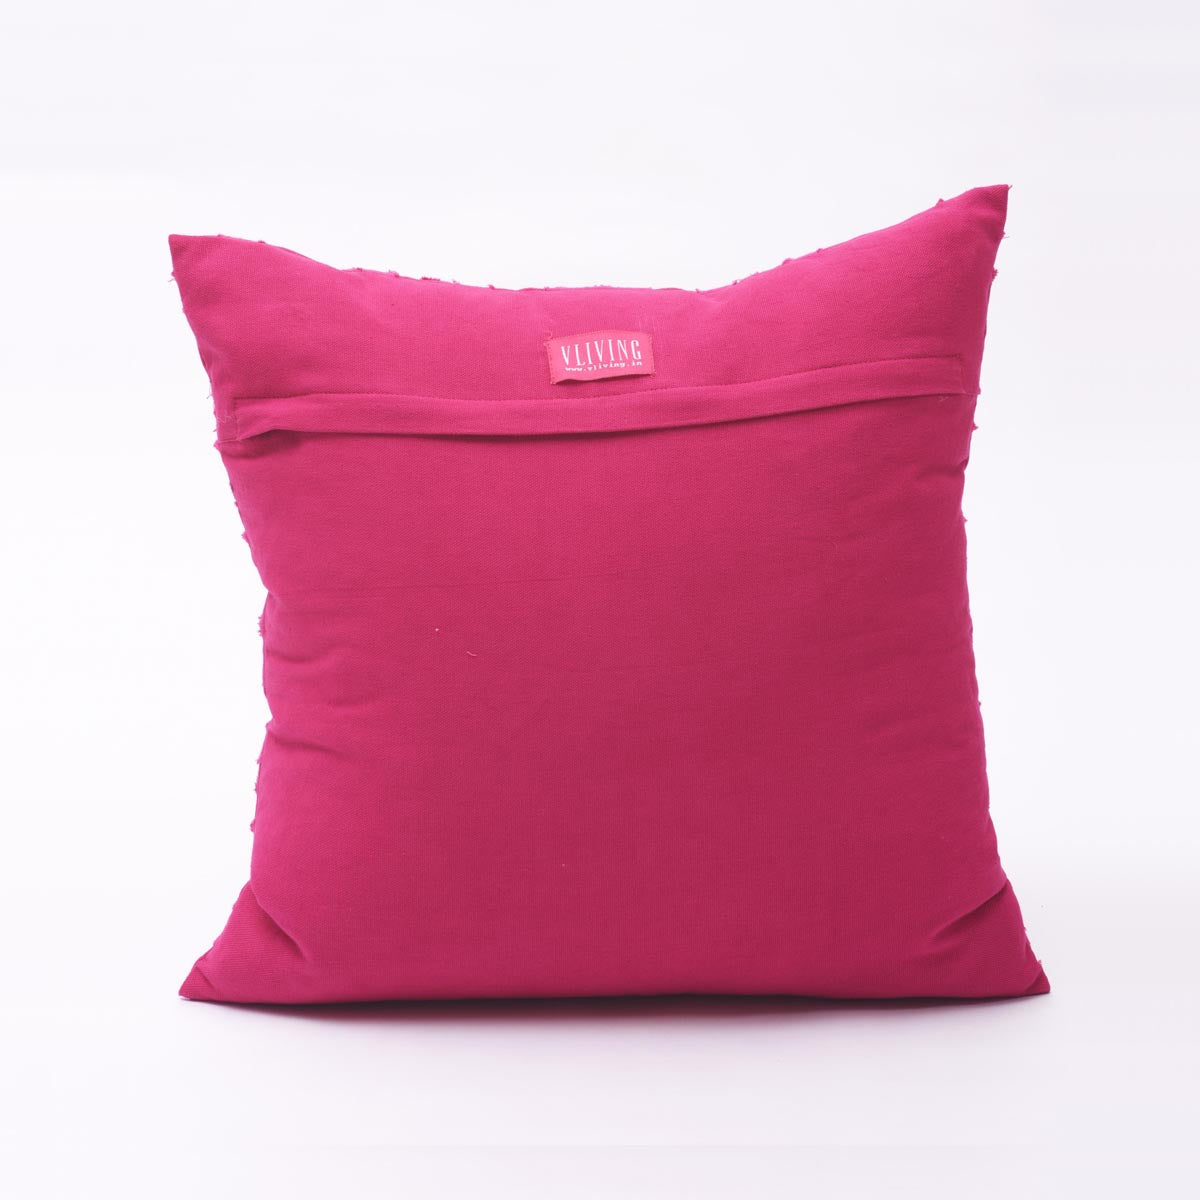 Fuschia cotton pillow cover, geometric, arabesque, applique, bright pink cushion, 16X16 inches